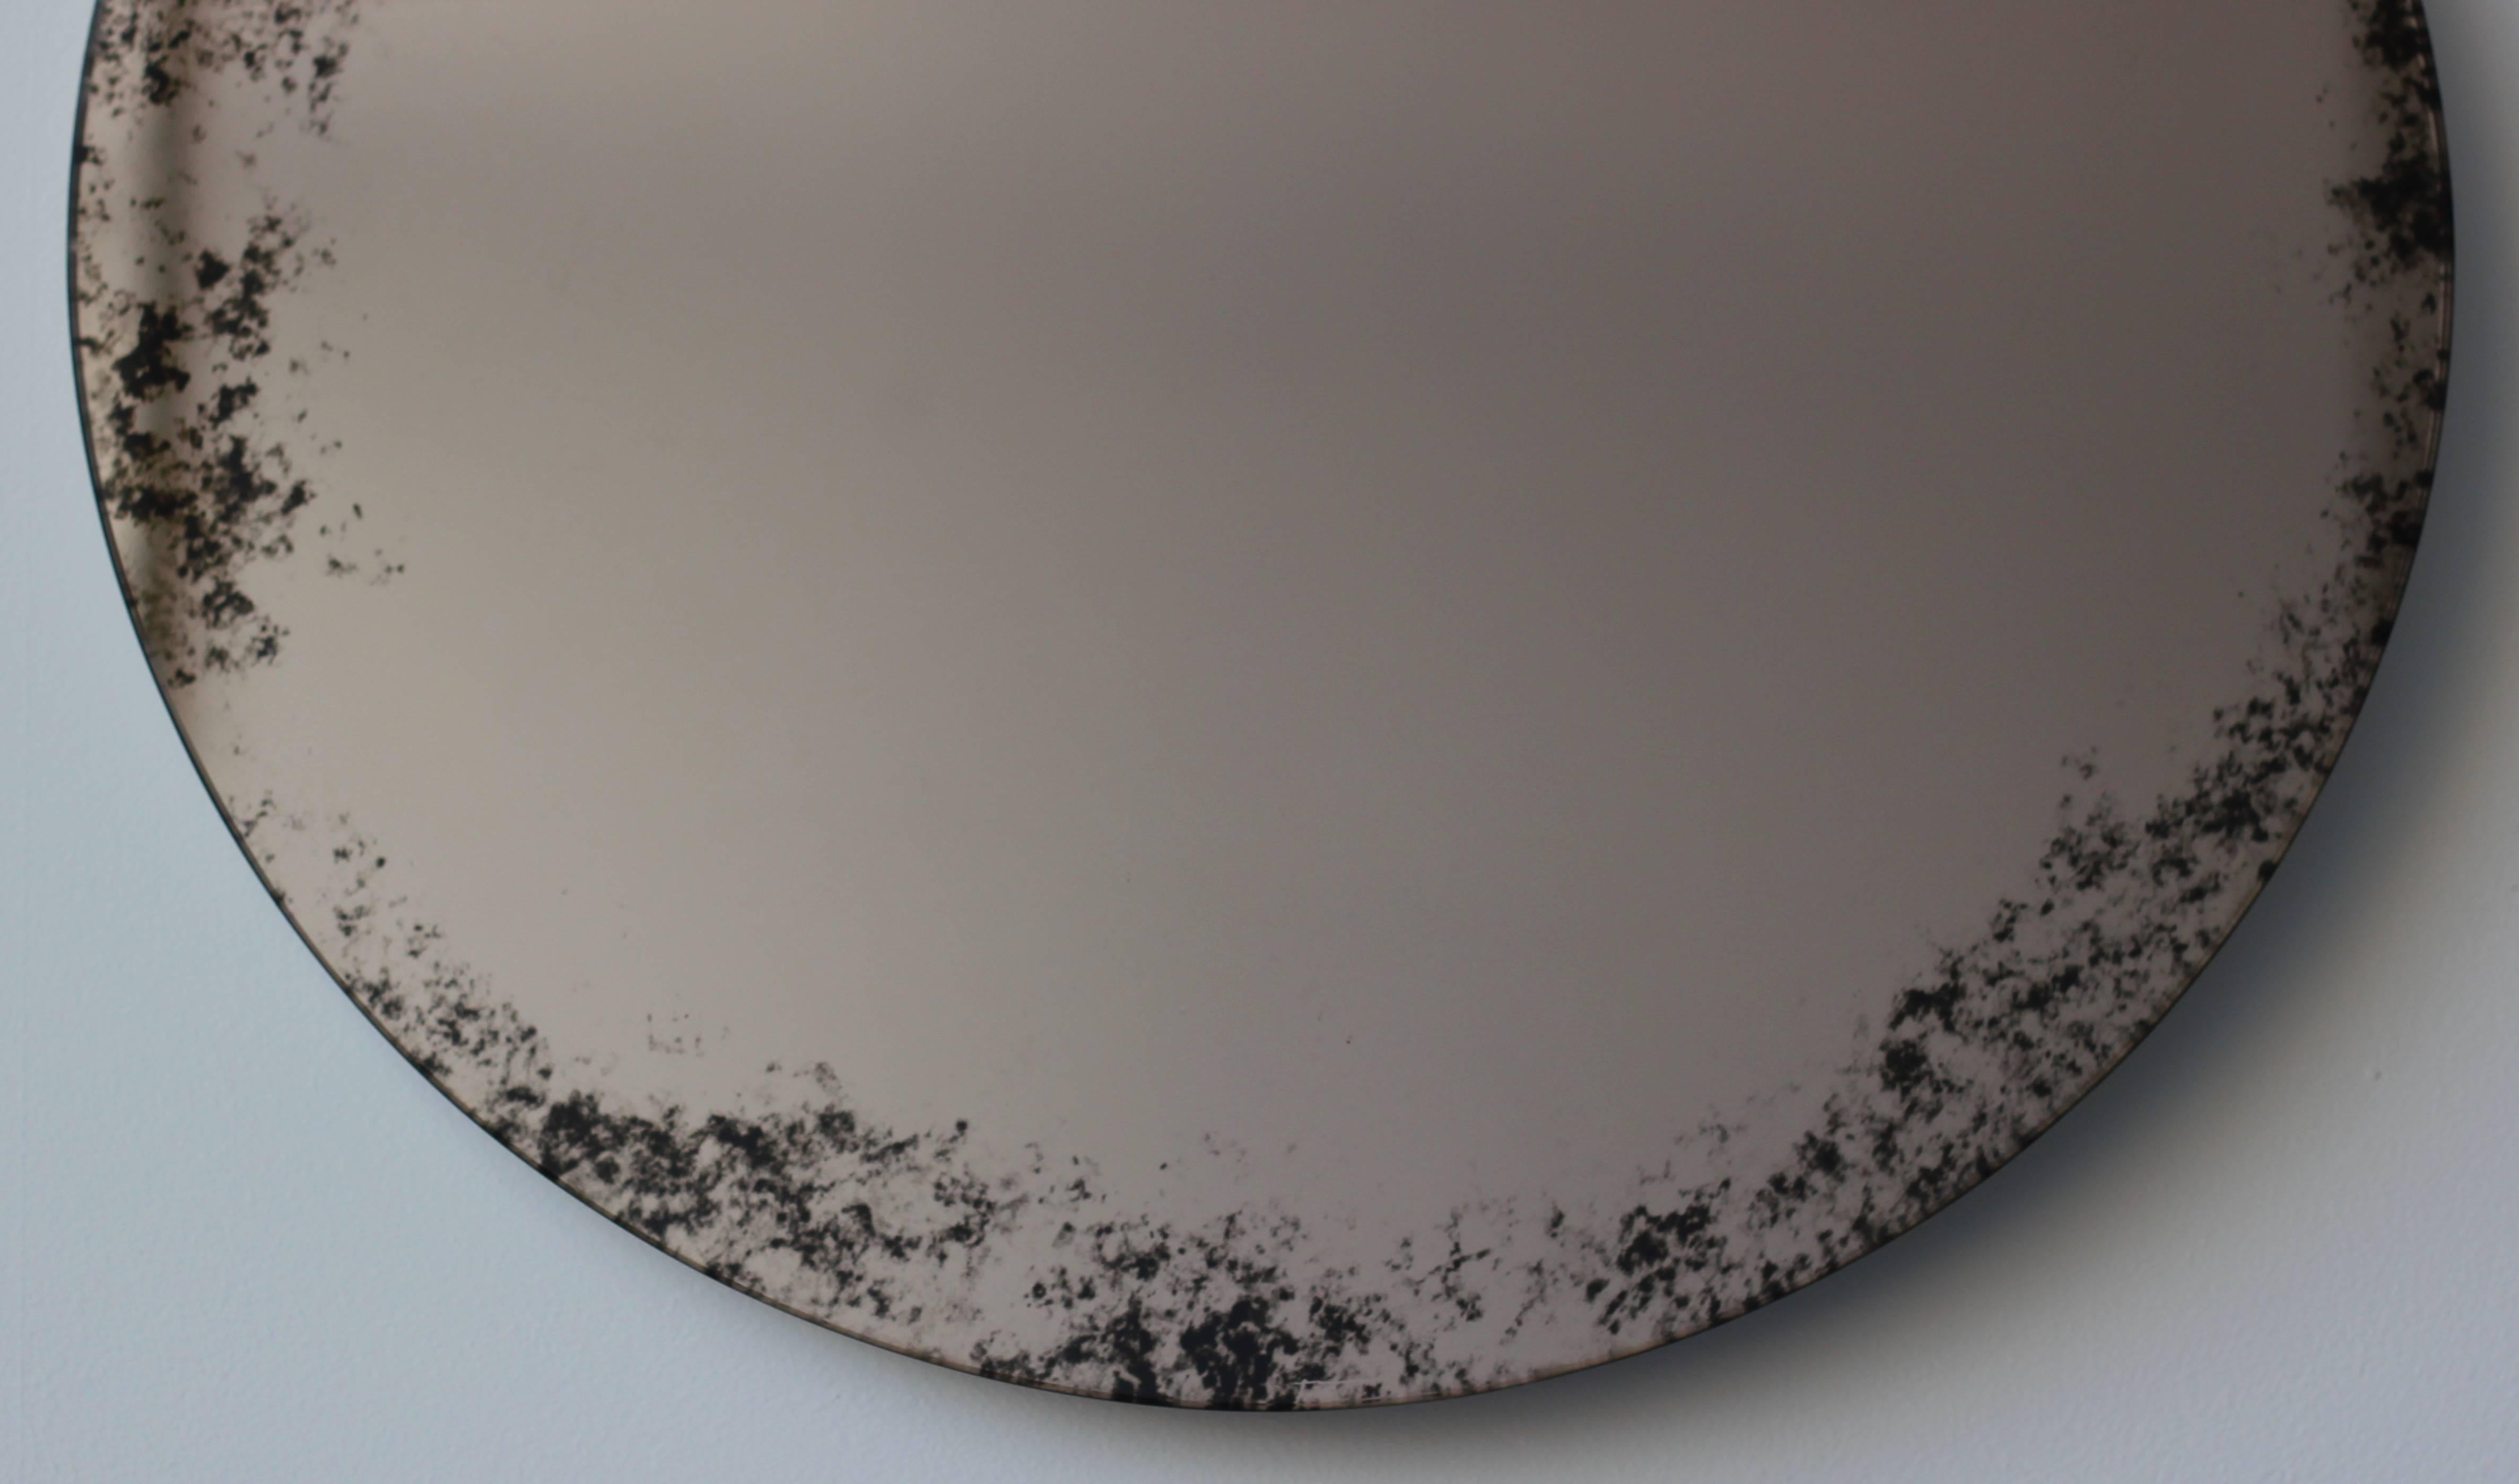 Indian Orbis Round Mirror Bronze Tinted with Black Antiqued Finish dia. 40cm / 15.8